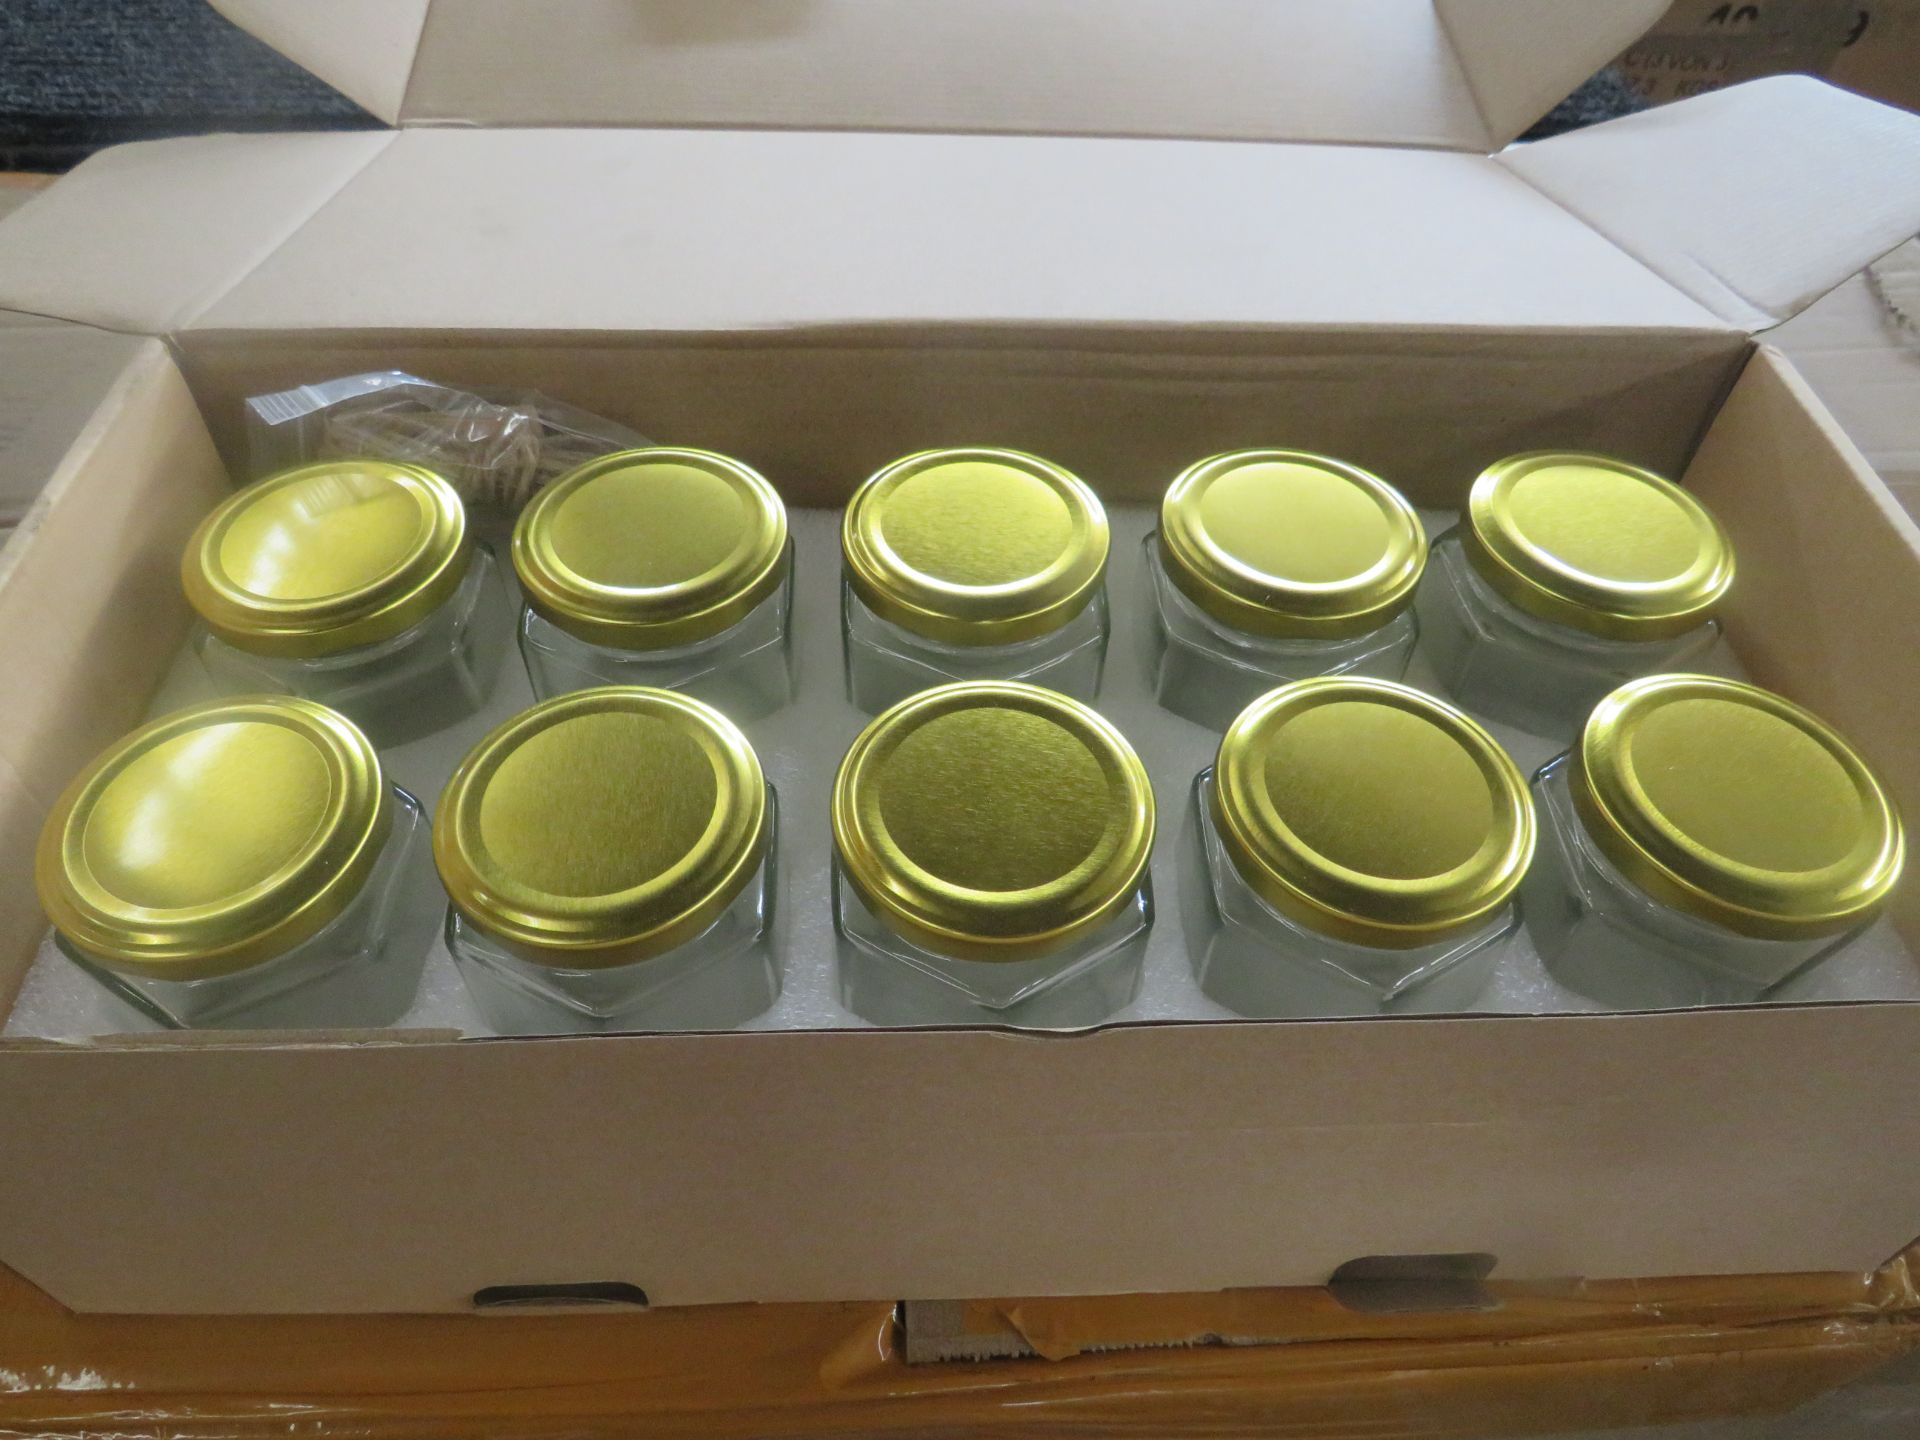 2x HEMOTON 10pcs Jam Jars Glass Spice Jars Portable Useful Honey Jars for Home Kitchen Wedding